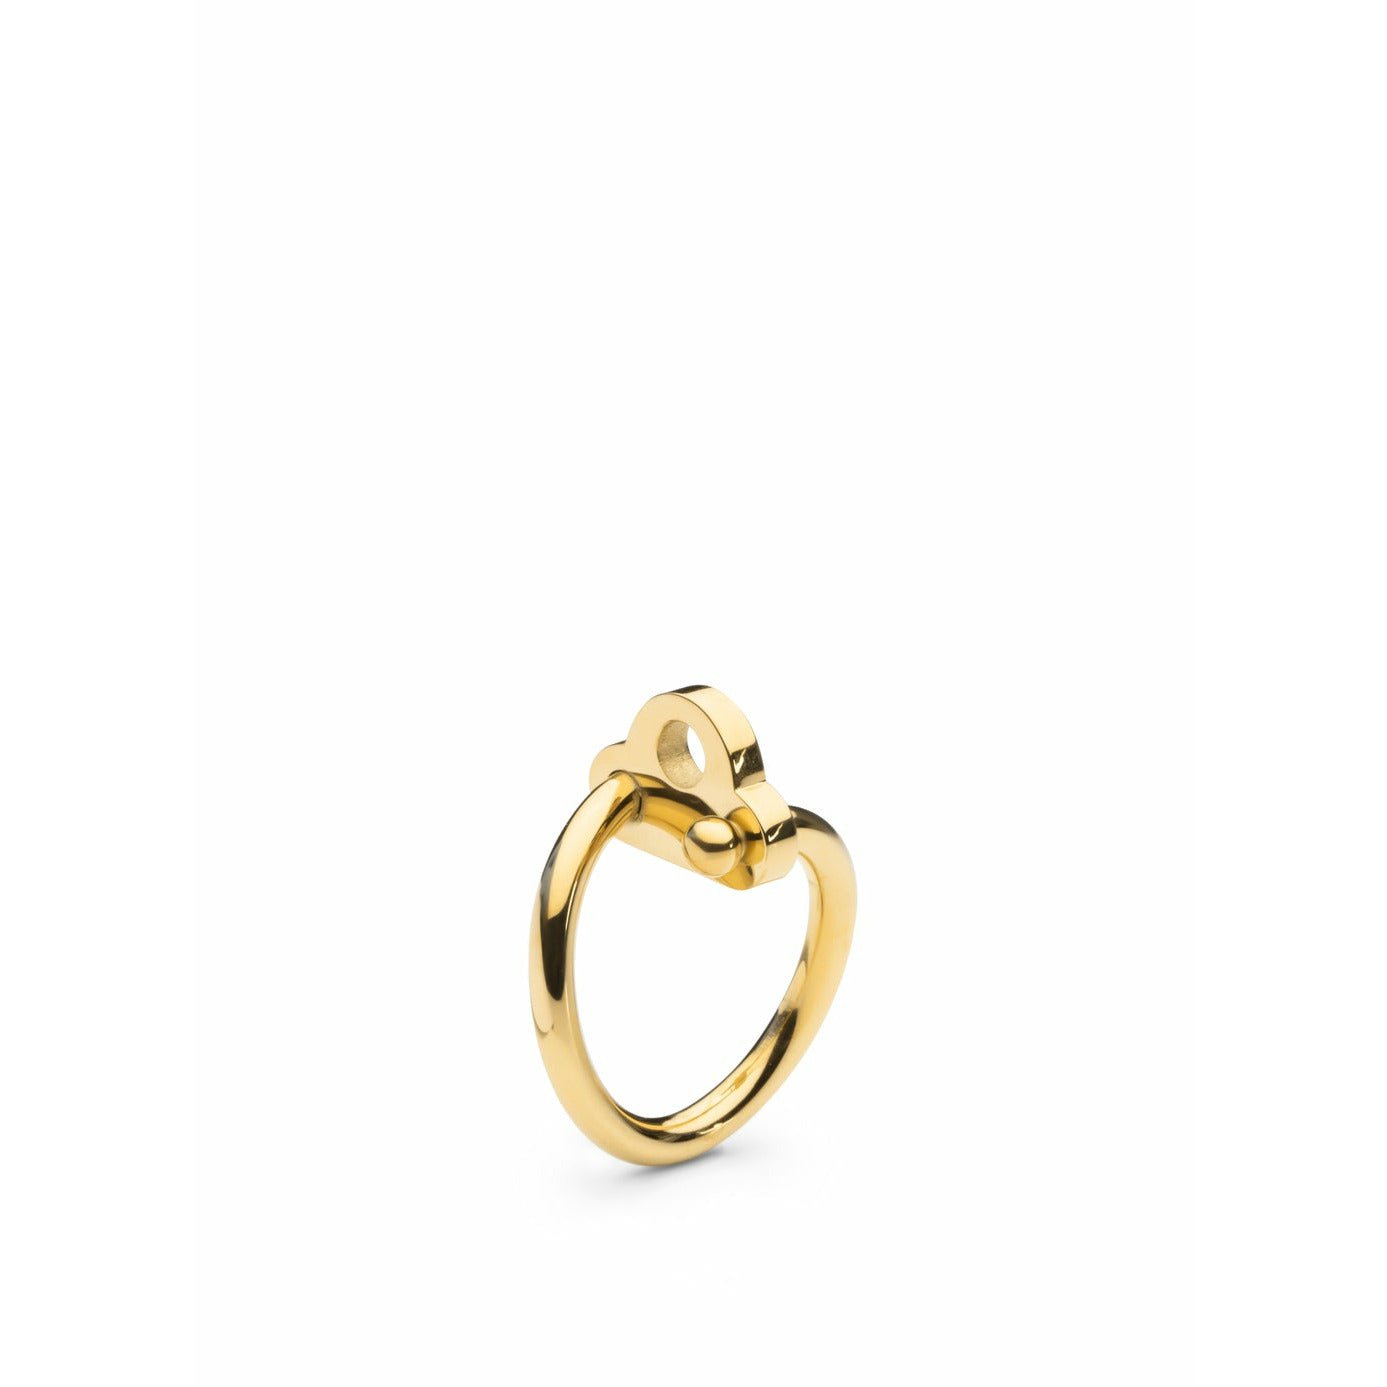 Skultuna Key Ring klein, vergoldet, Ø1,6 cm